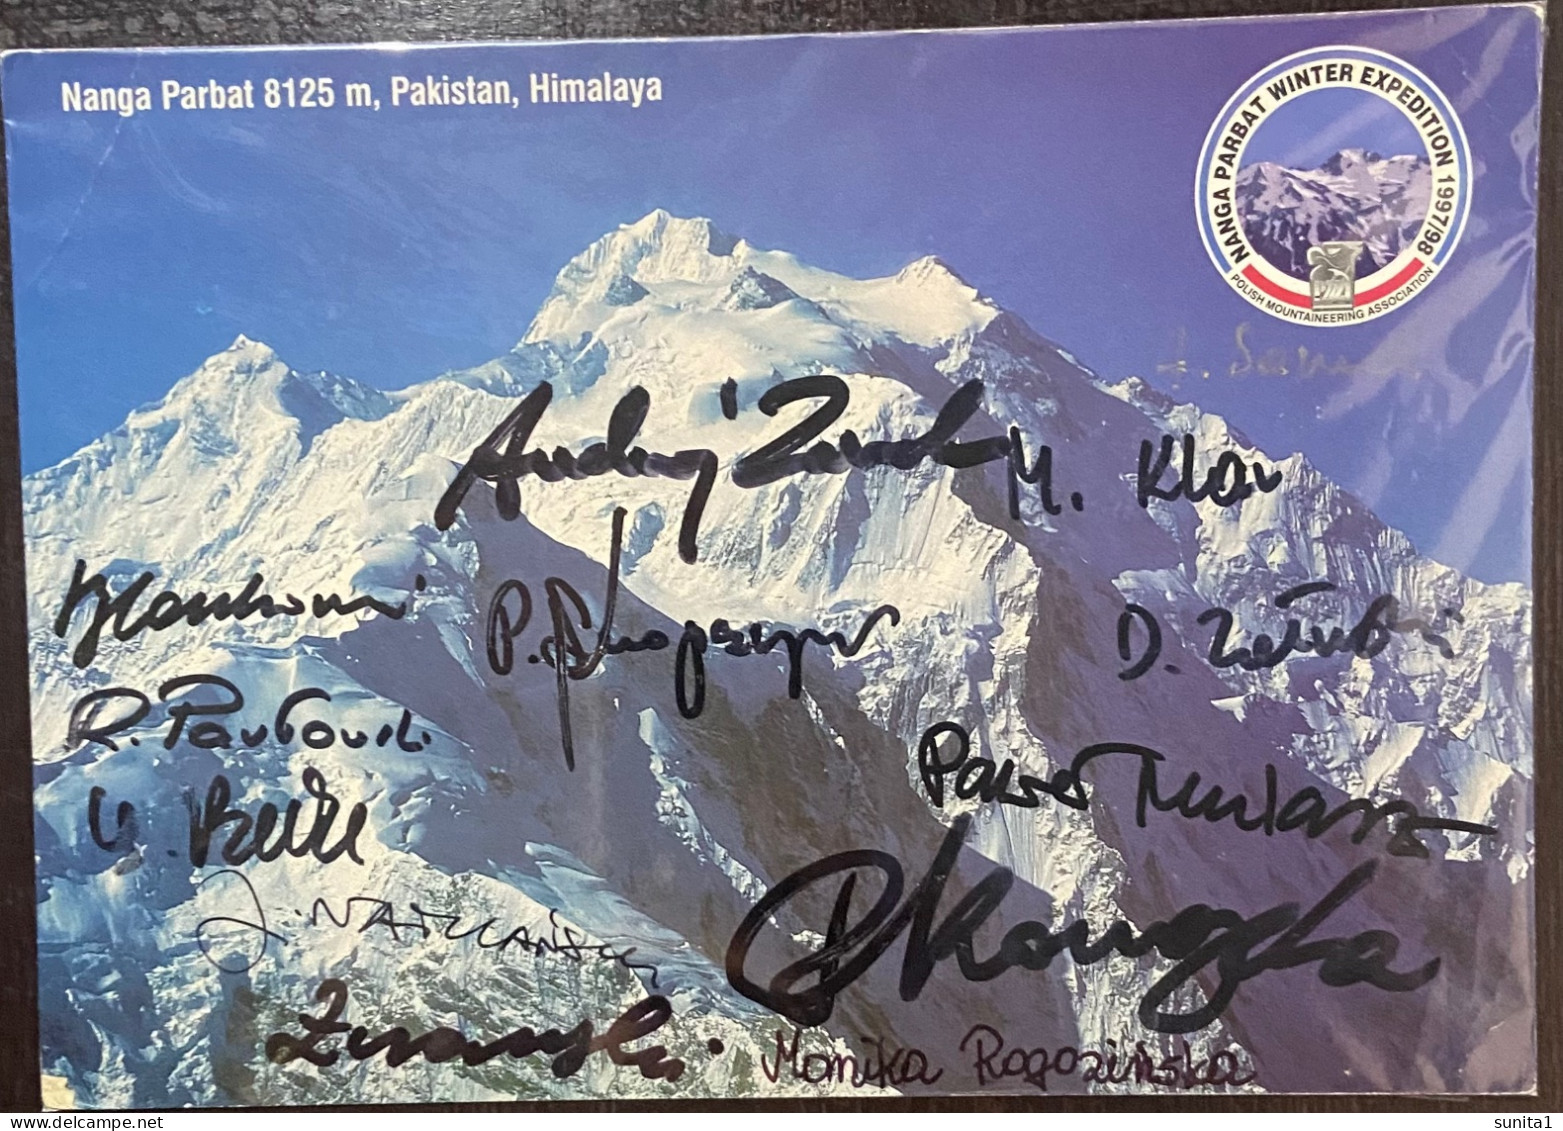 Expedition,mountaineering, Bergsteigen, Autograph, Alpinismo, Signed, Climbing, Himalaya, Nanga Parbat, Alpinistica - Mountaineering, Alpinism